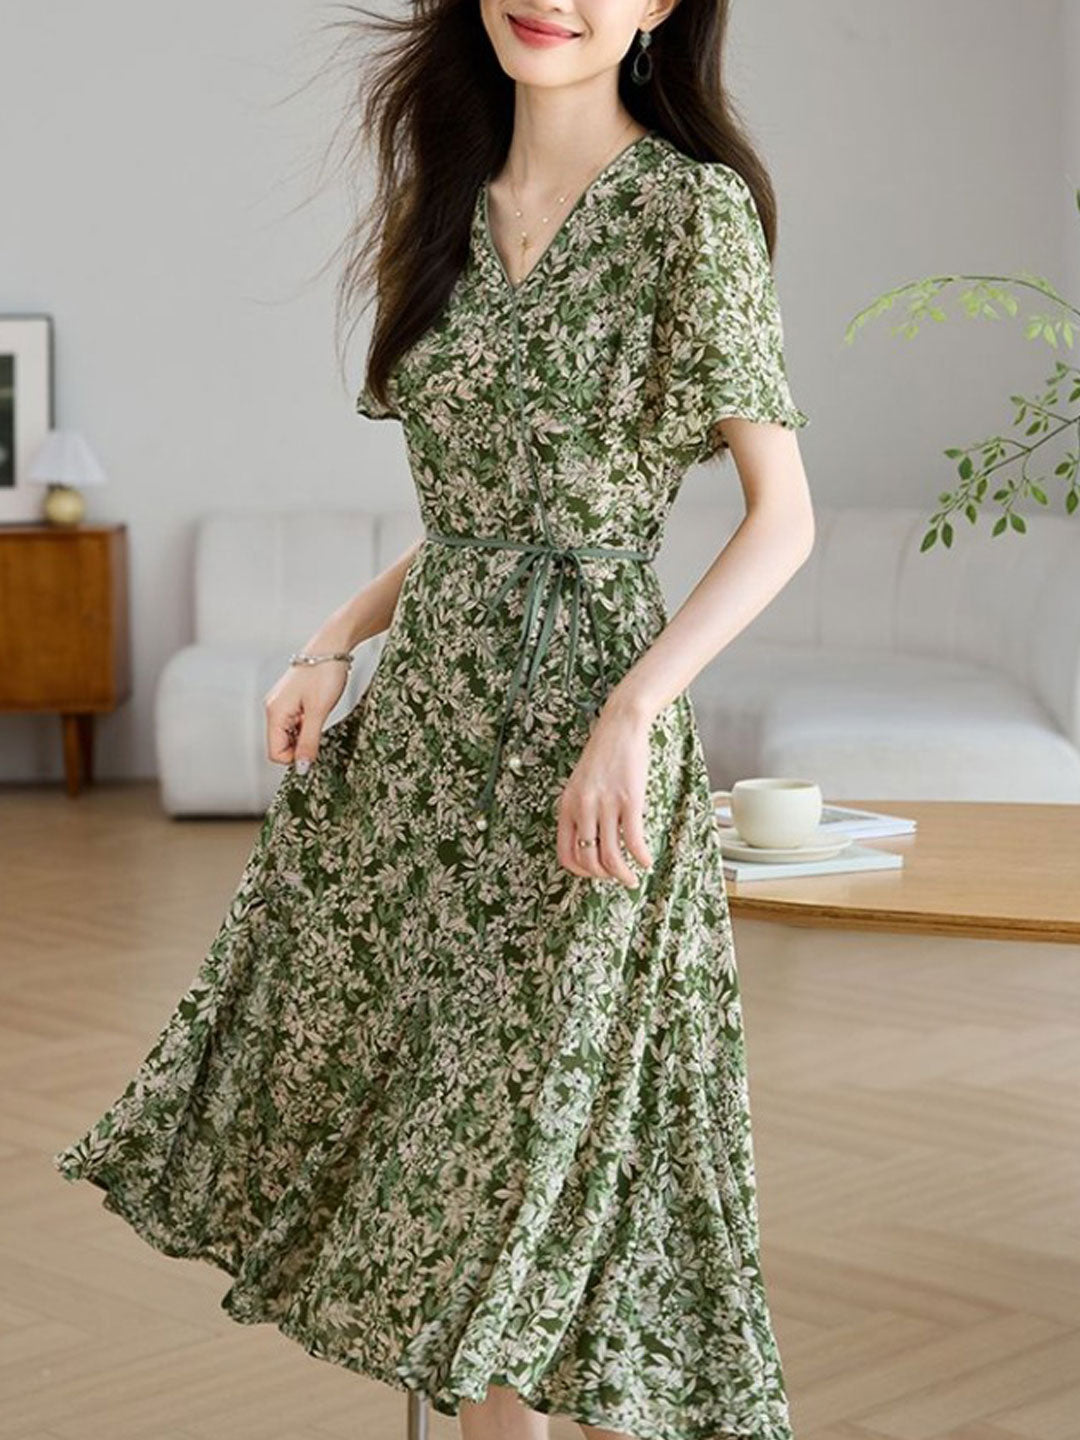 Natalie Classic V-Neck Floral Printed Chiffon Dress